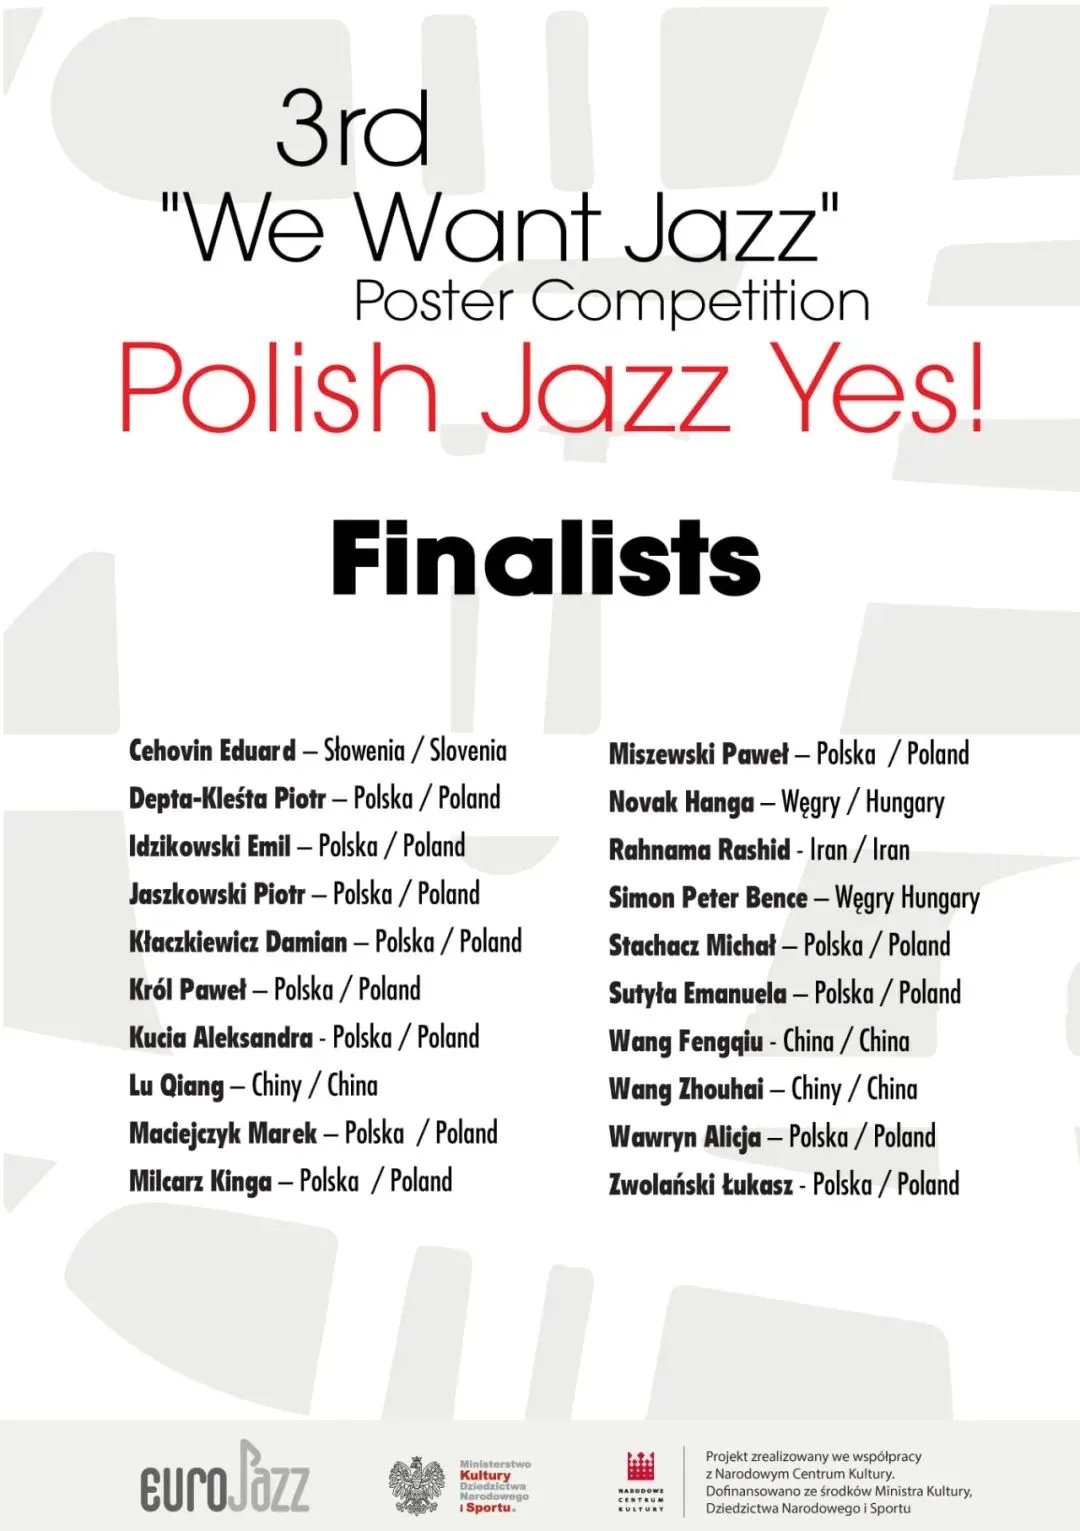 poland|2021波兰第三届We Want Jazz国际海报竞赛获奖作品